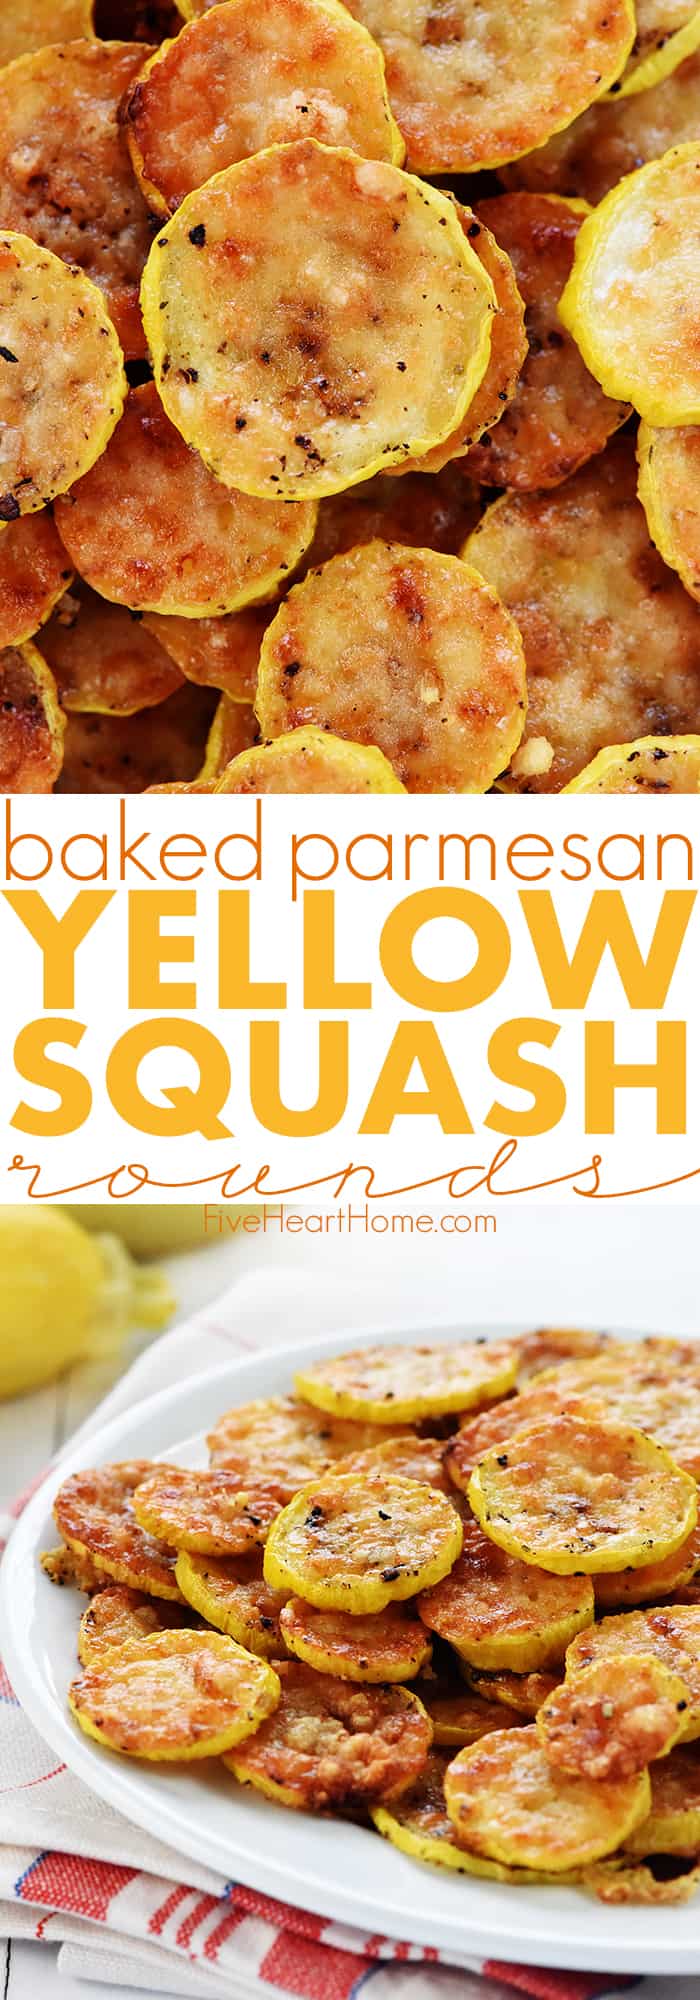 yellow squash recipes